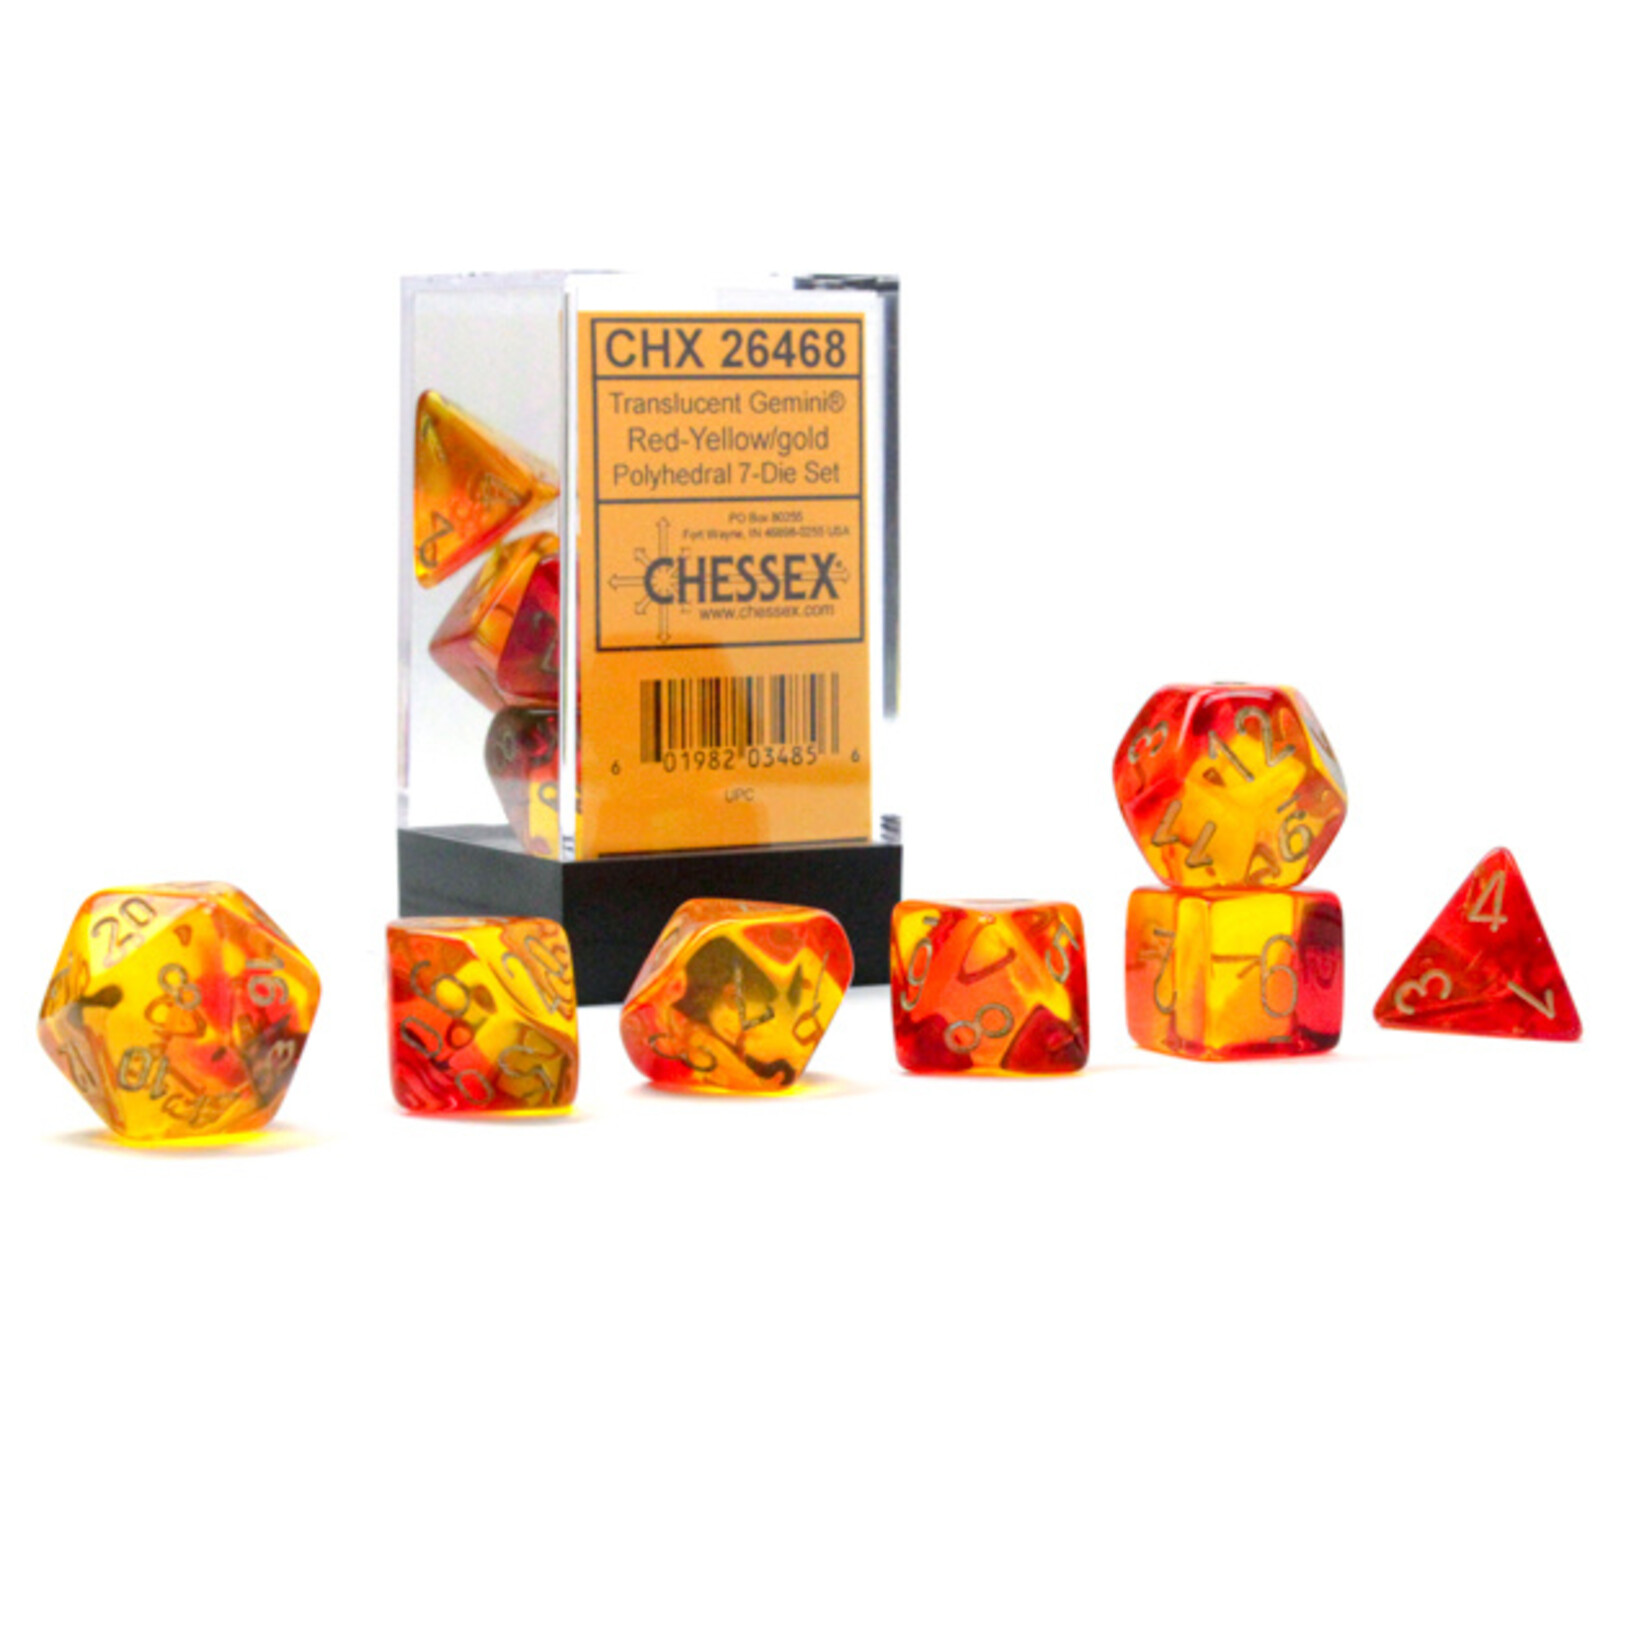 Chessex Chessex 7-Die set Gemini Translucent - Red-Yellow/Gold